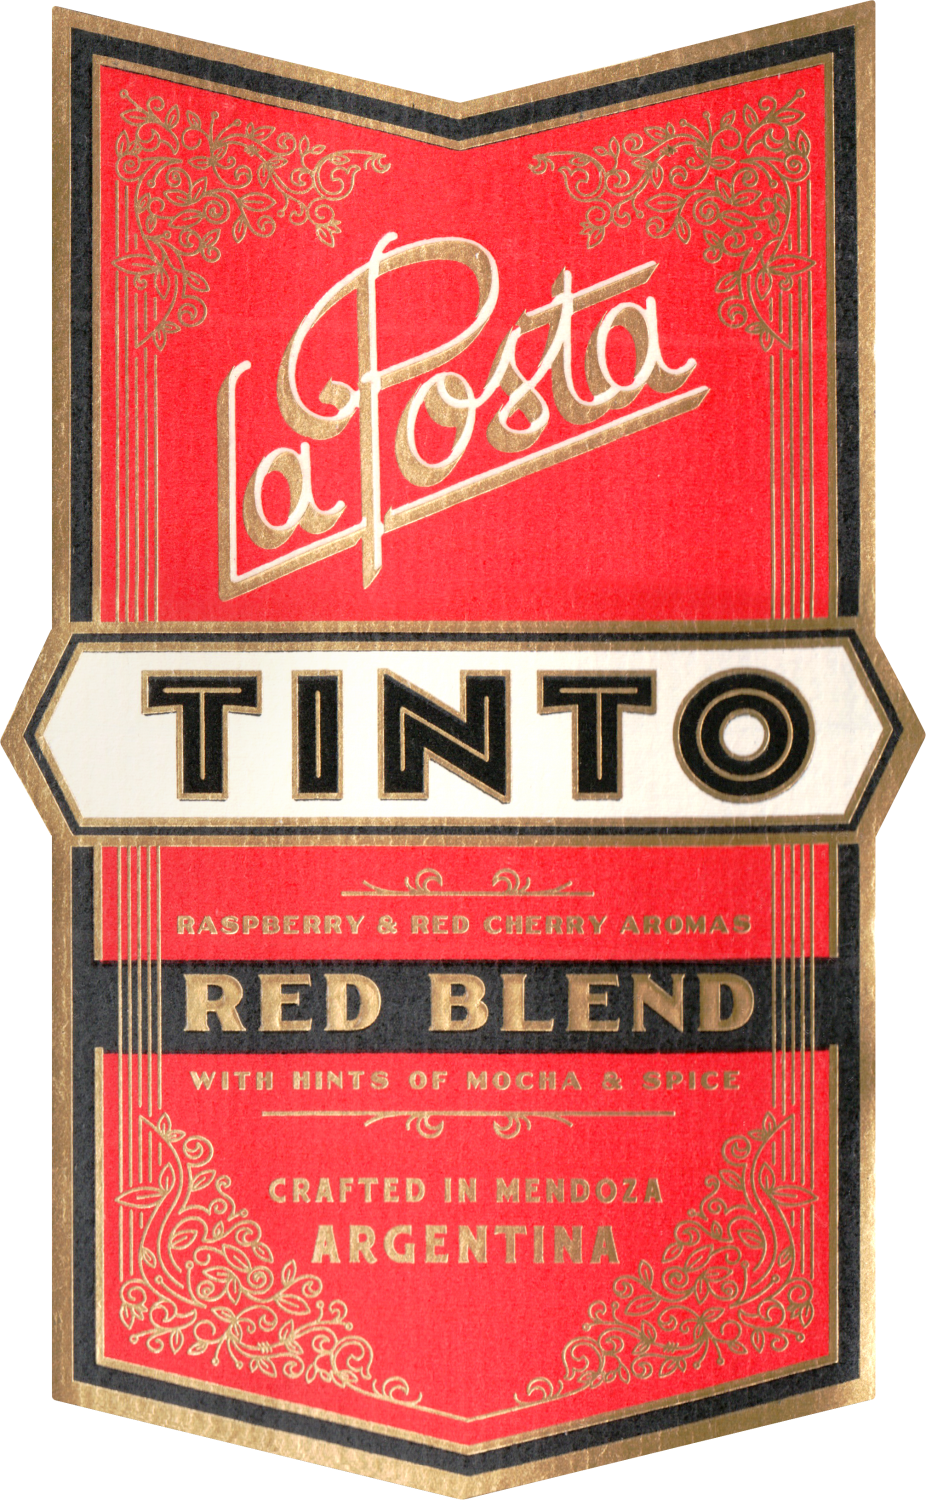 La Posta Tinto Red Blend 2019